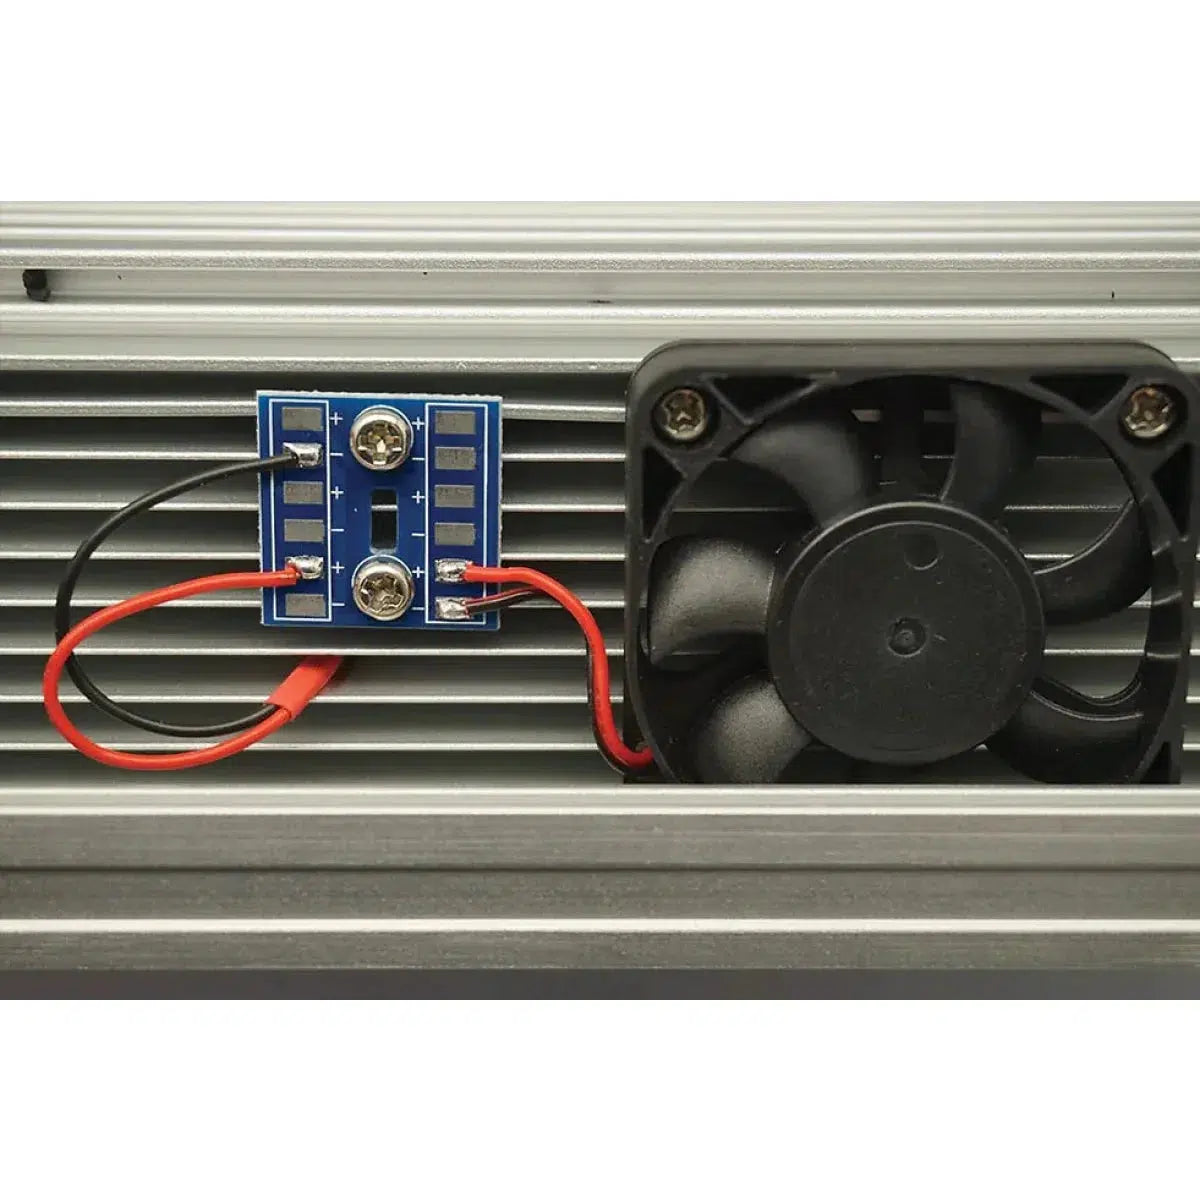 ZAPCO-Z-SP Super Power Series - Z-150.4 SP-4-Channel Amplifier-Masori.de